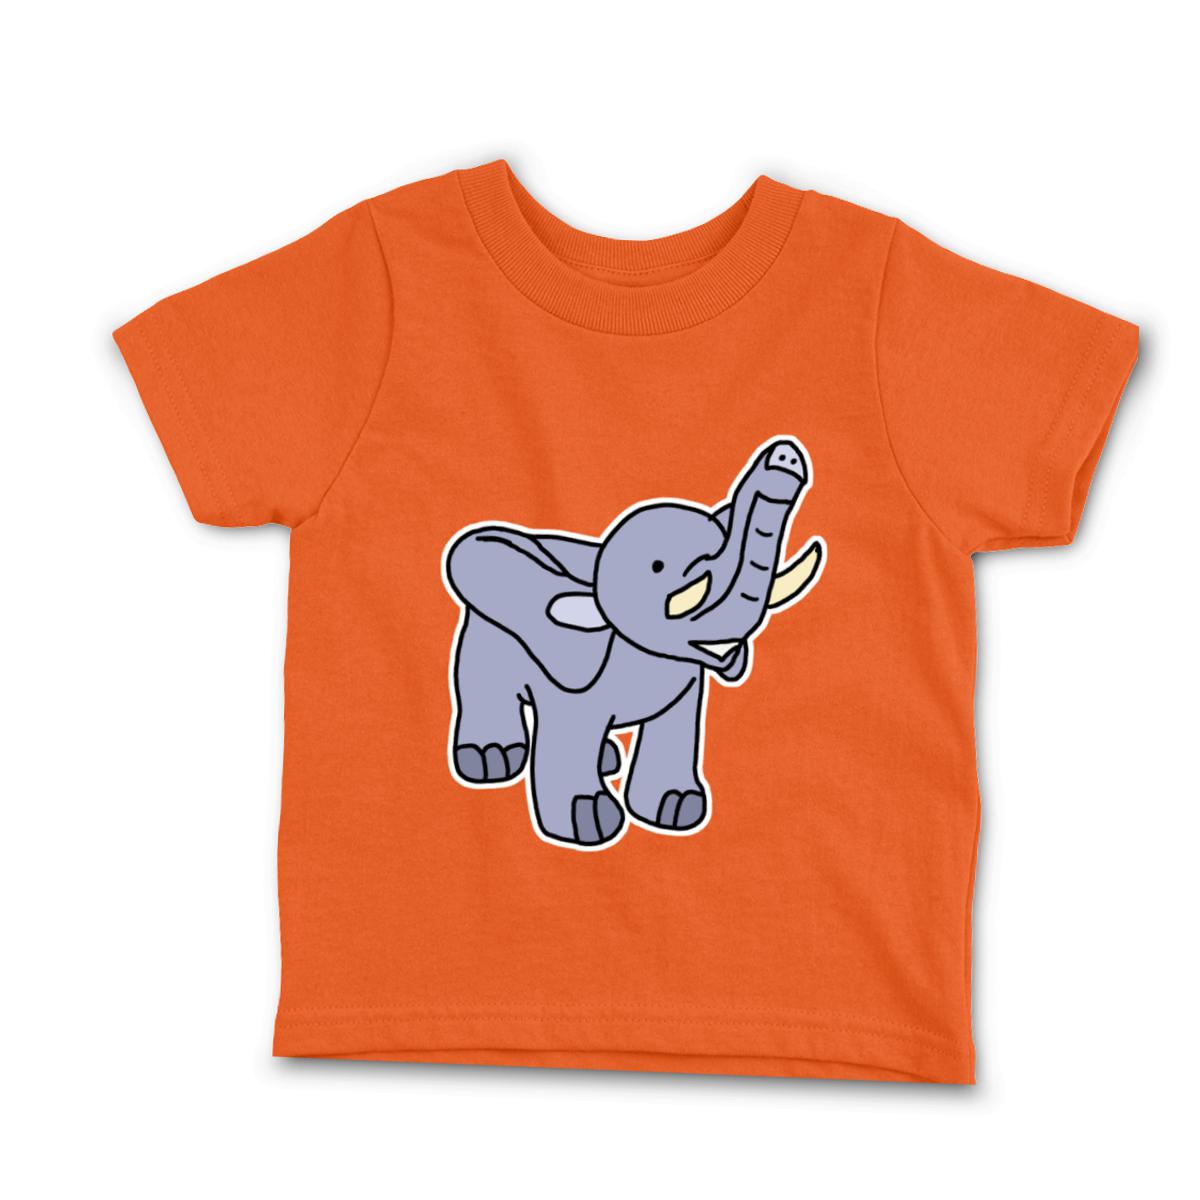 Toy Elephant Toddler Tee 2T orange